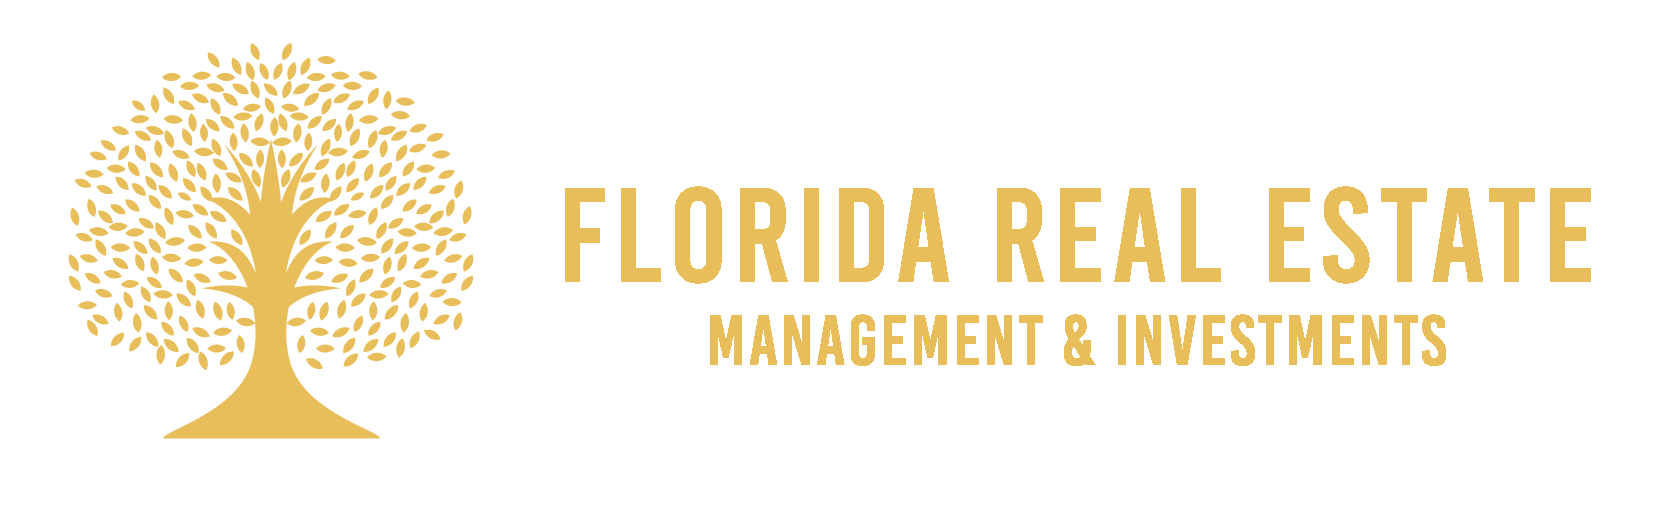 Florida Real Estate Management & Investments Logo